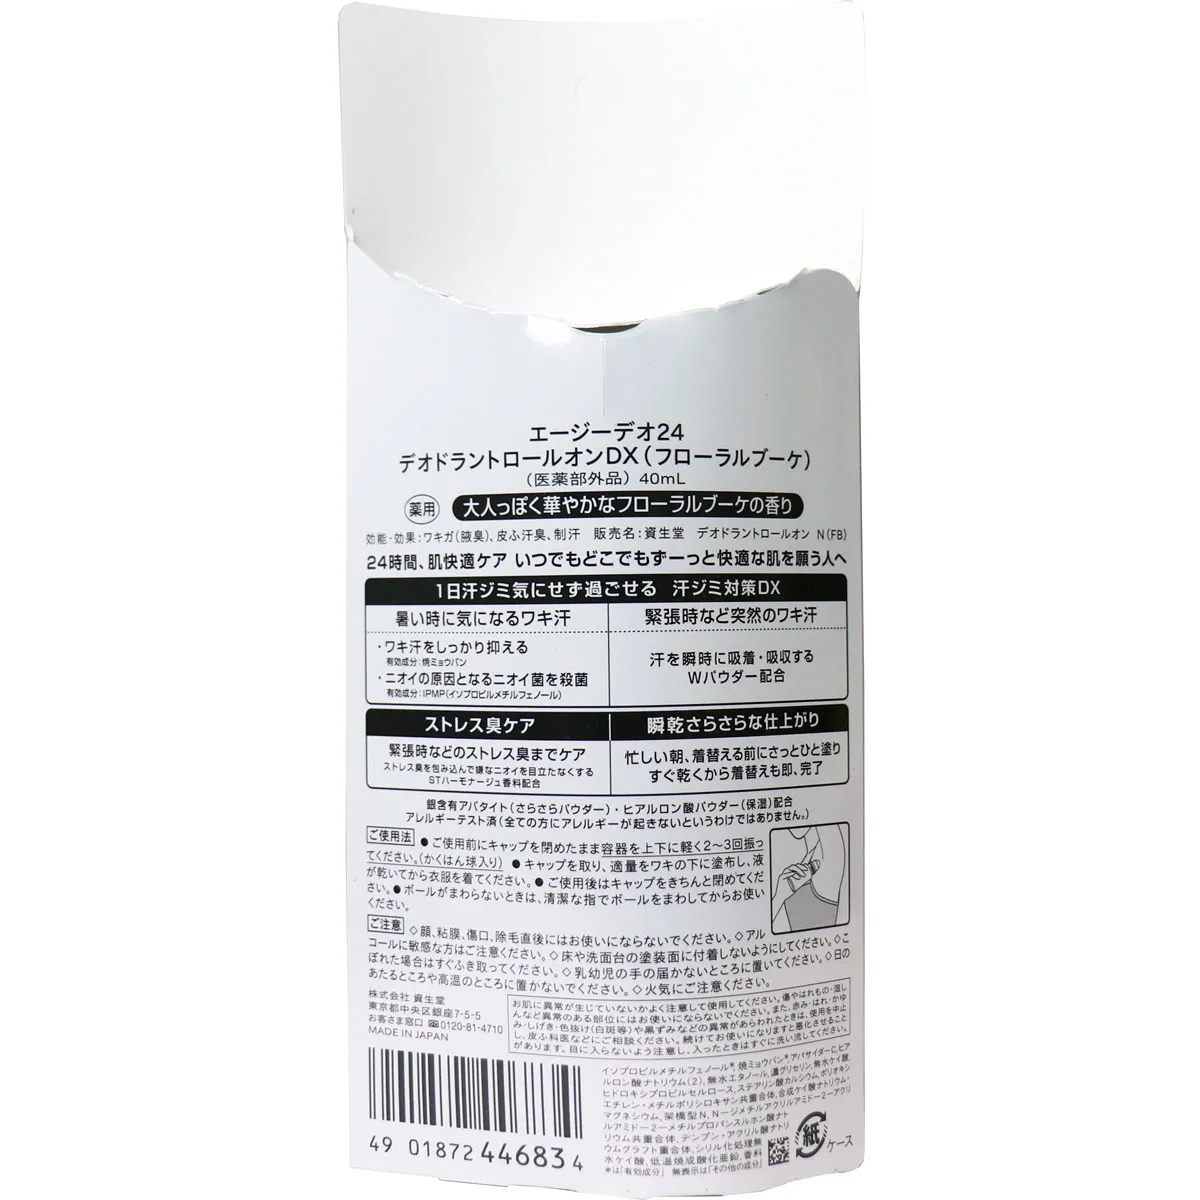 Роликовый дезодорант с ионами серебра и ароматом цветом Shiseido Ag 24 Deo Premium Deodorant roll-on Floral Aroma